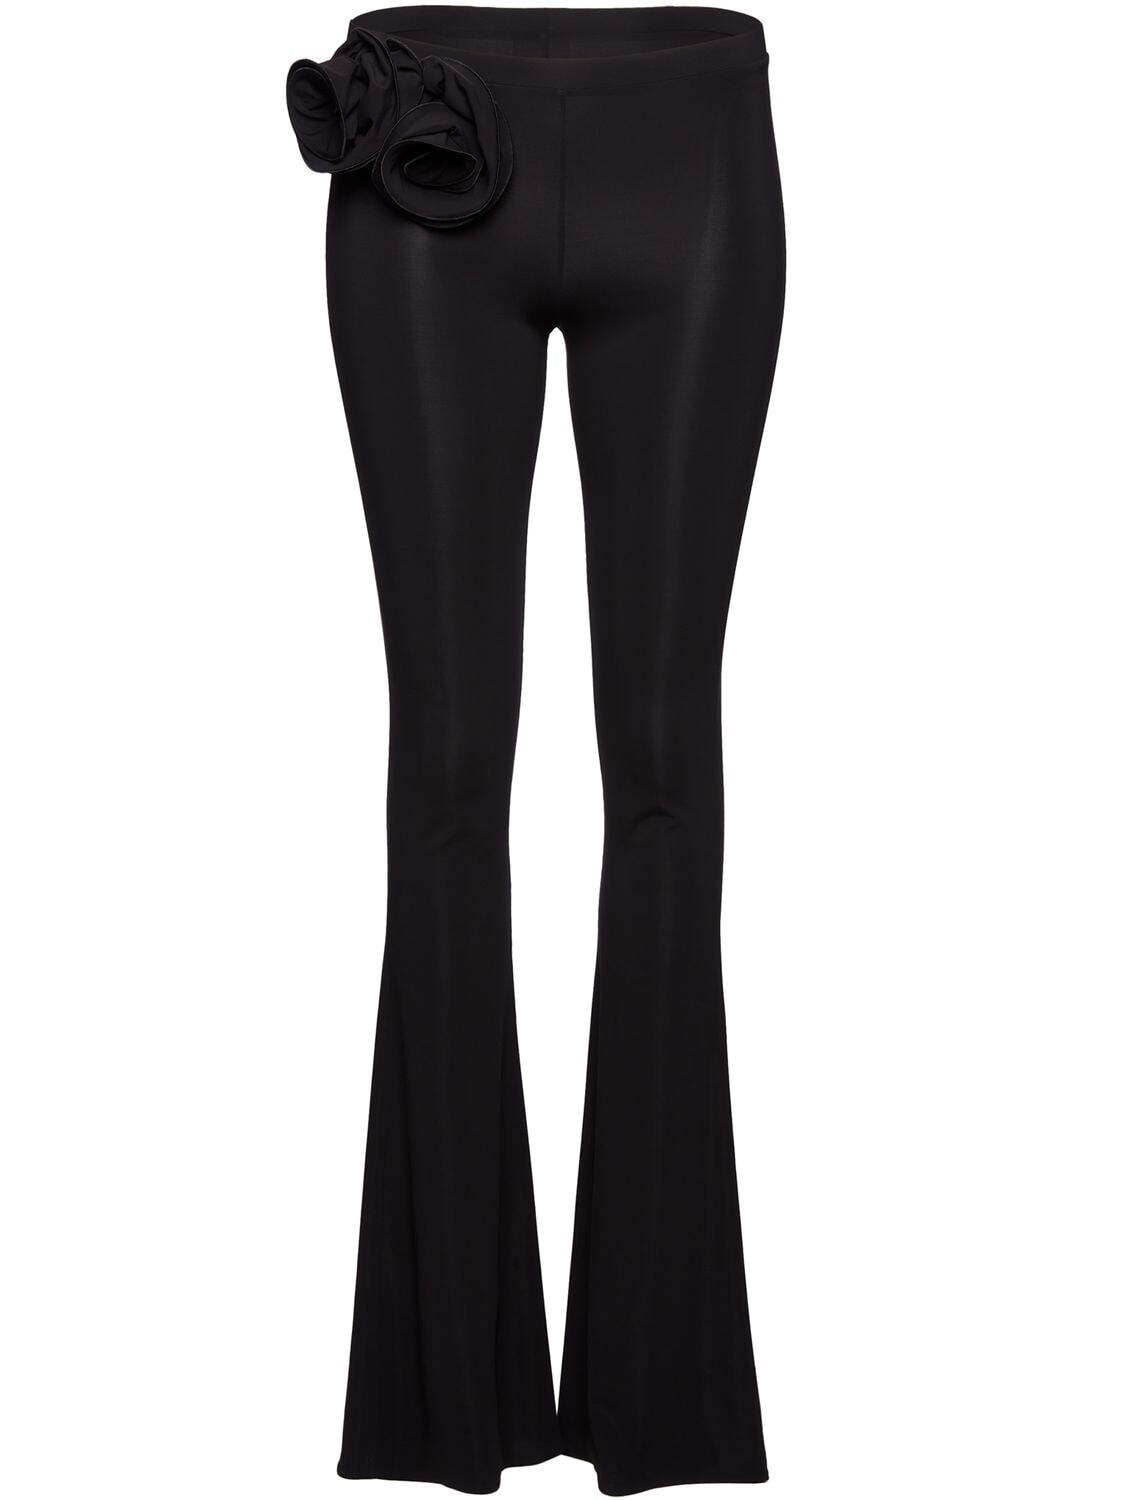 MAGDA BUTRYM Flared Jersey Pants W/ Flower Appliqués in black